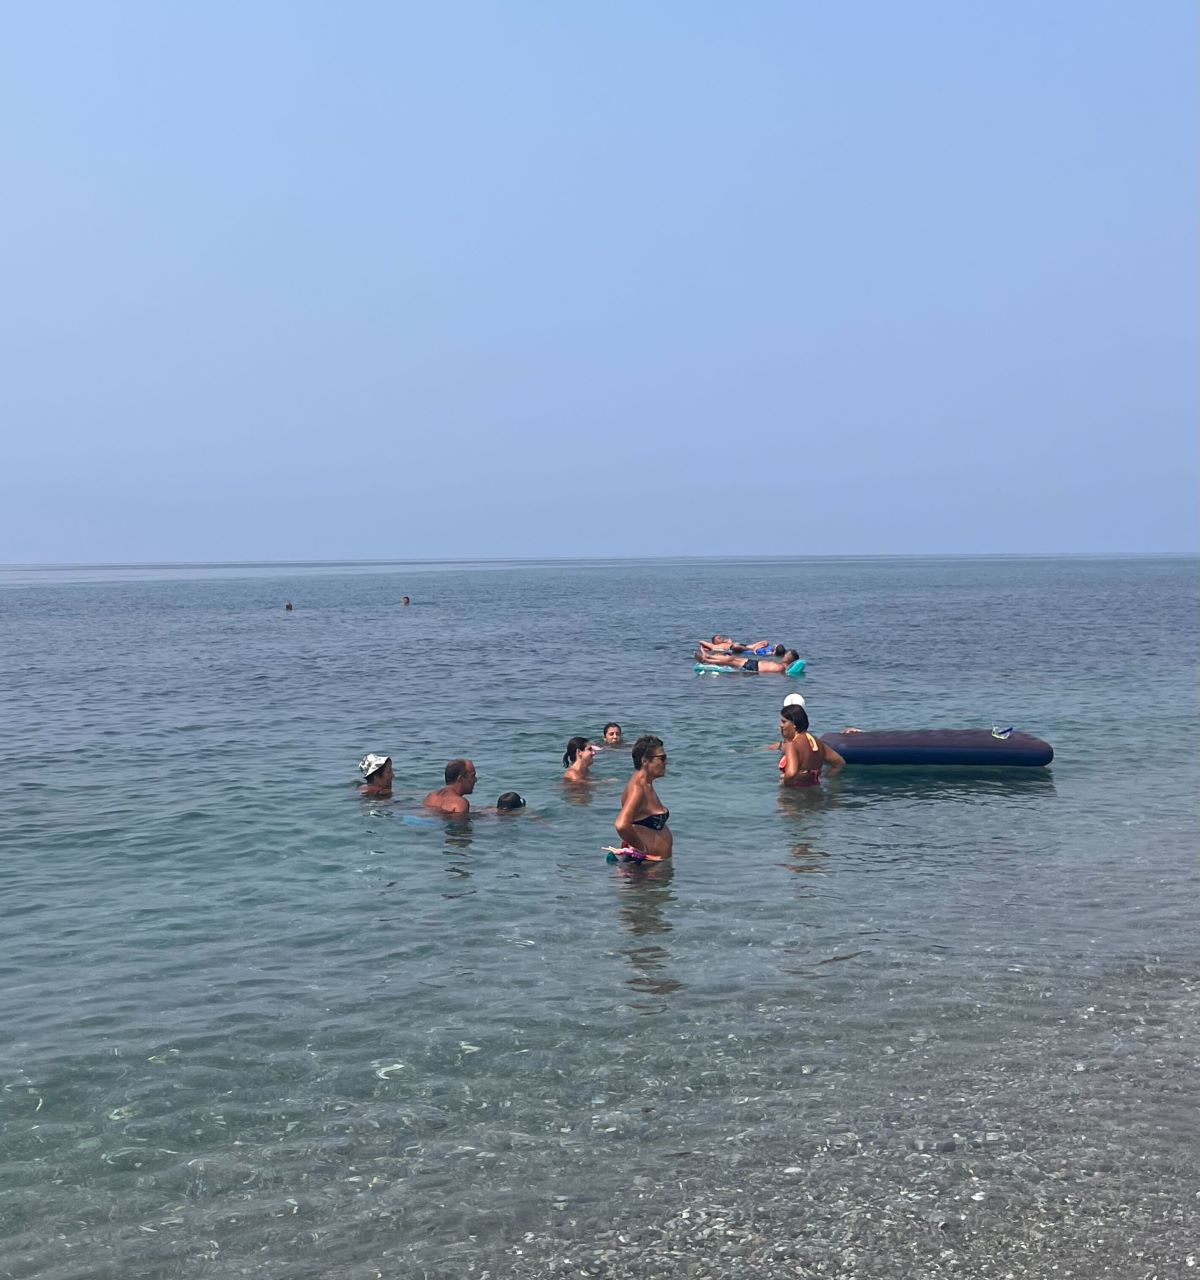 People swimming in the sea